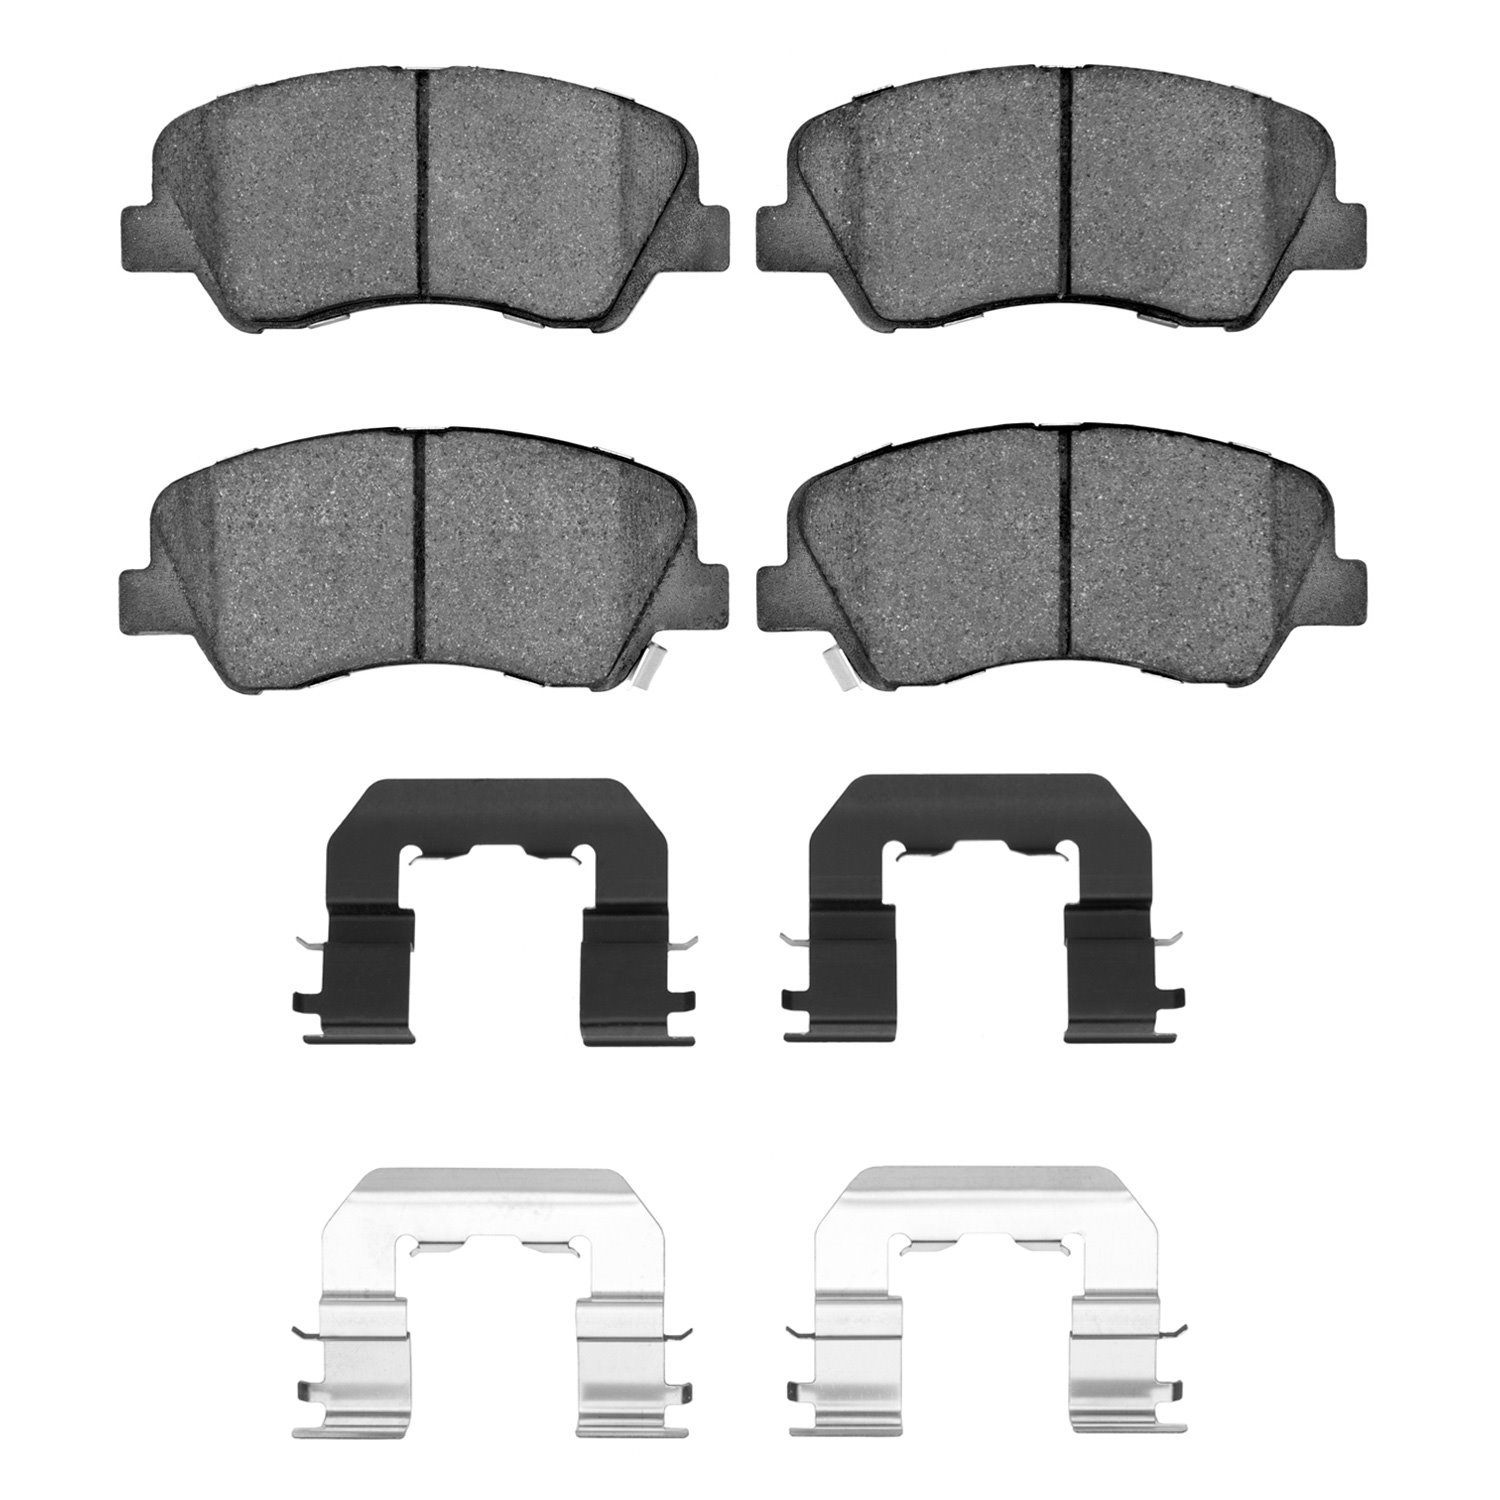 1310-1593-01 3000-Series Ceramic Brake Pads & Hardware Kit, 2012-2017 Multiple Makes/Models, Position: Front